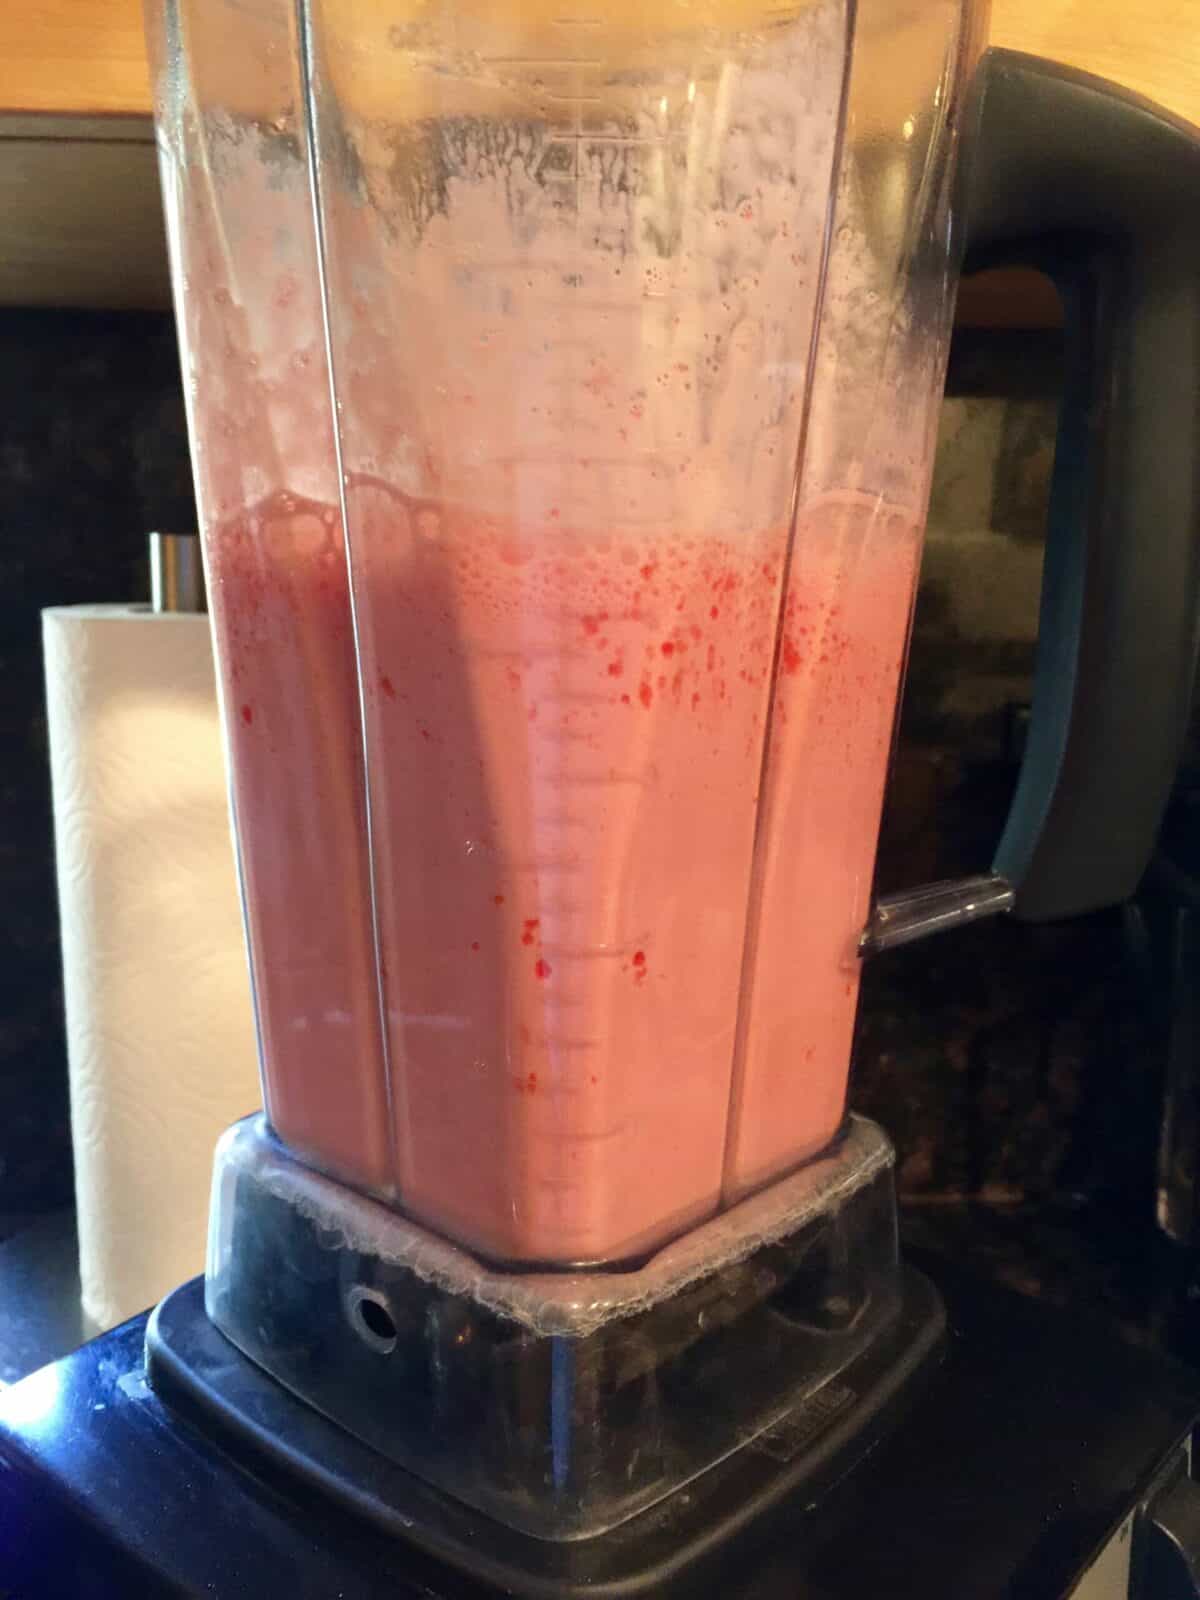 Mixing strawberry jello yogurt fluff in blender.